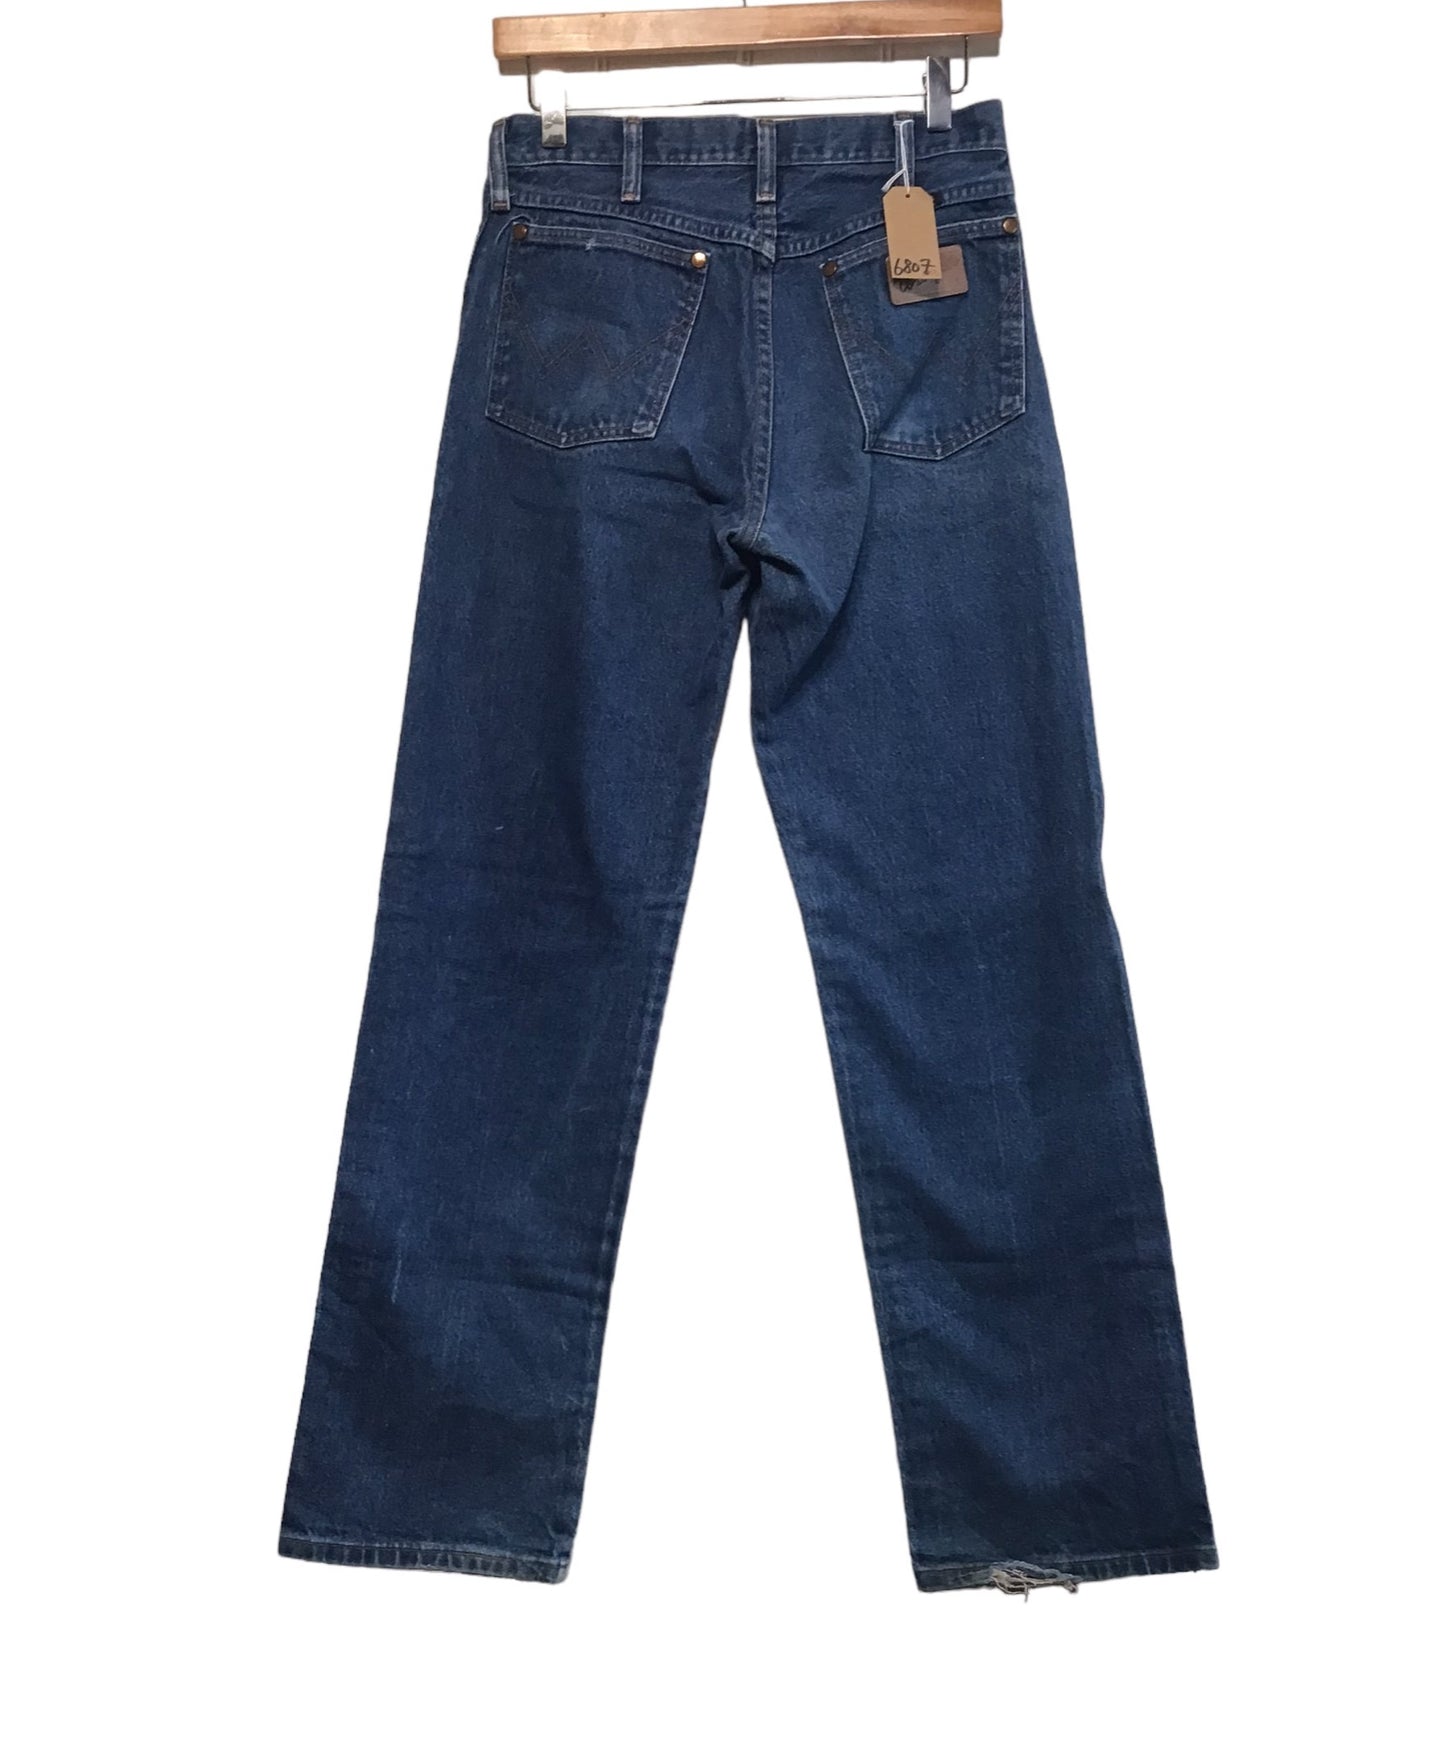 Wrangler Jeans (29x30)